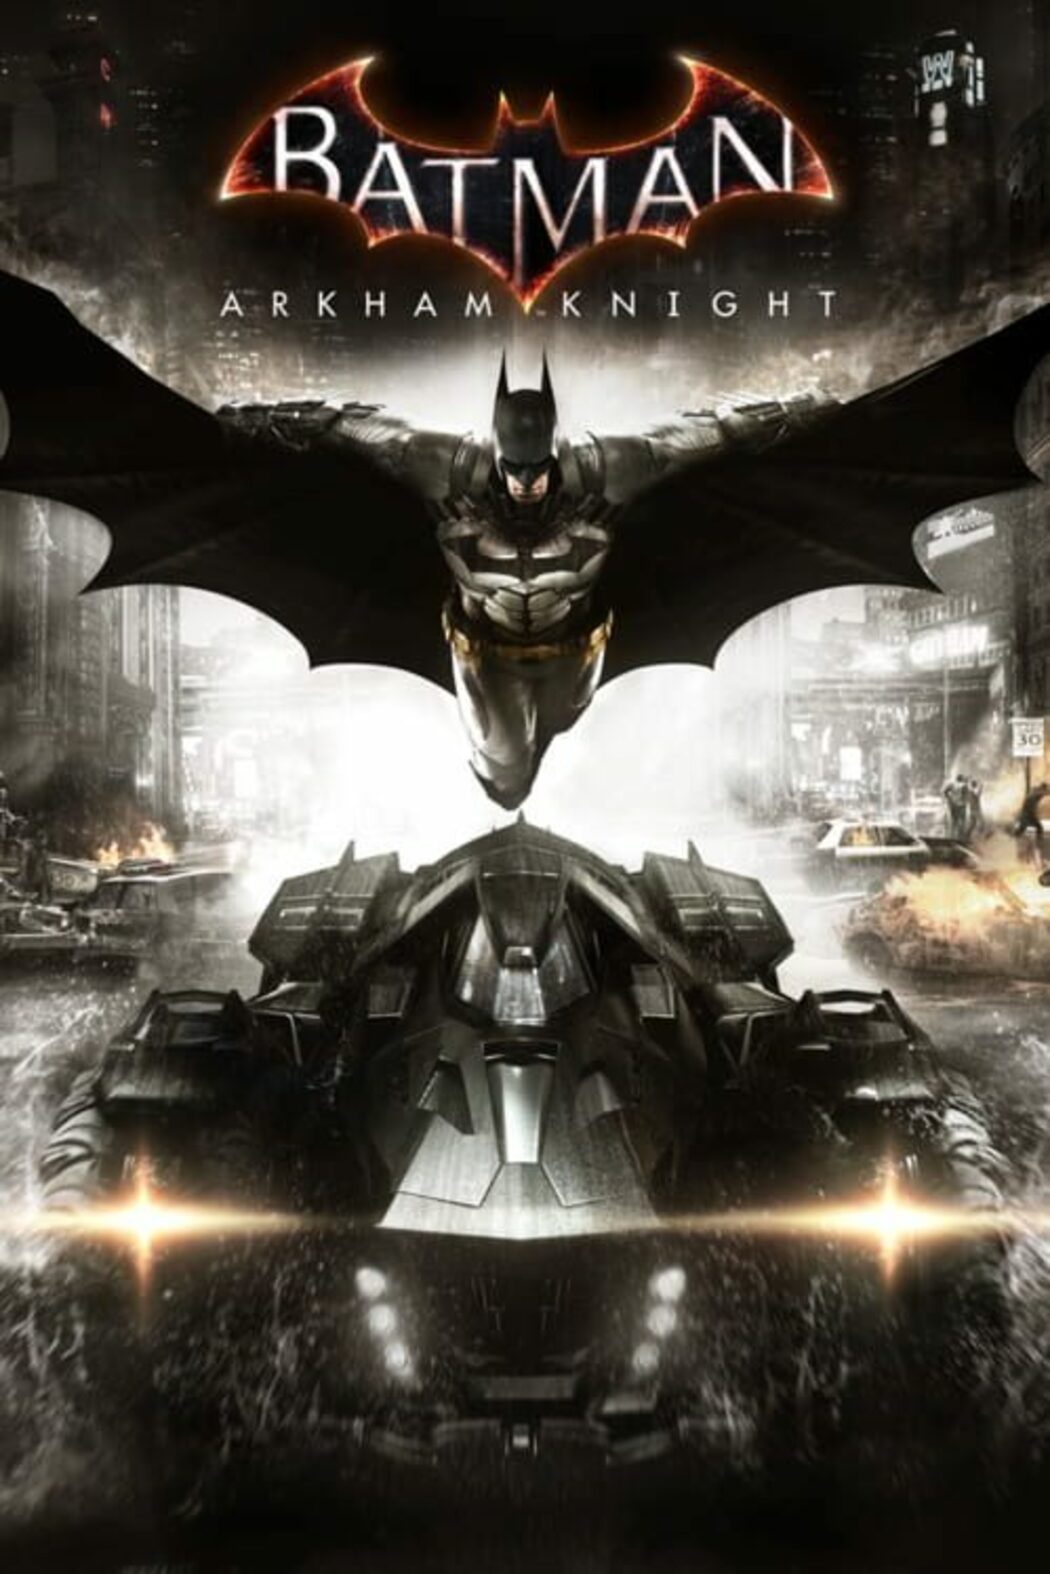 Buy Batman Arkham Knight Steam Key for Cheaper Price! | ENEBA